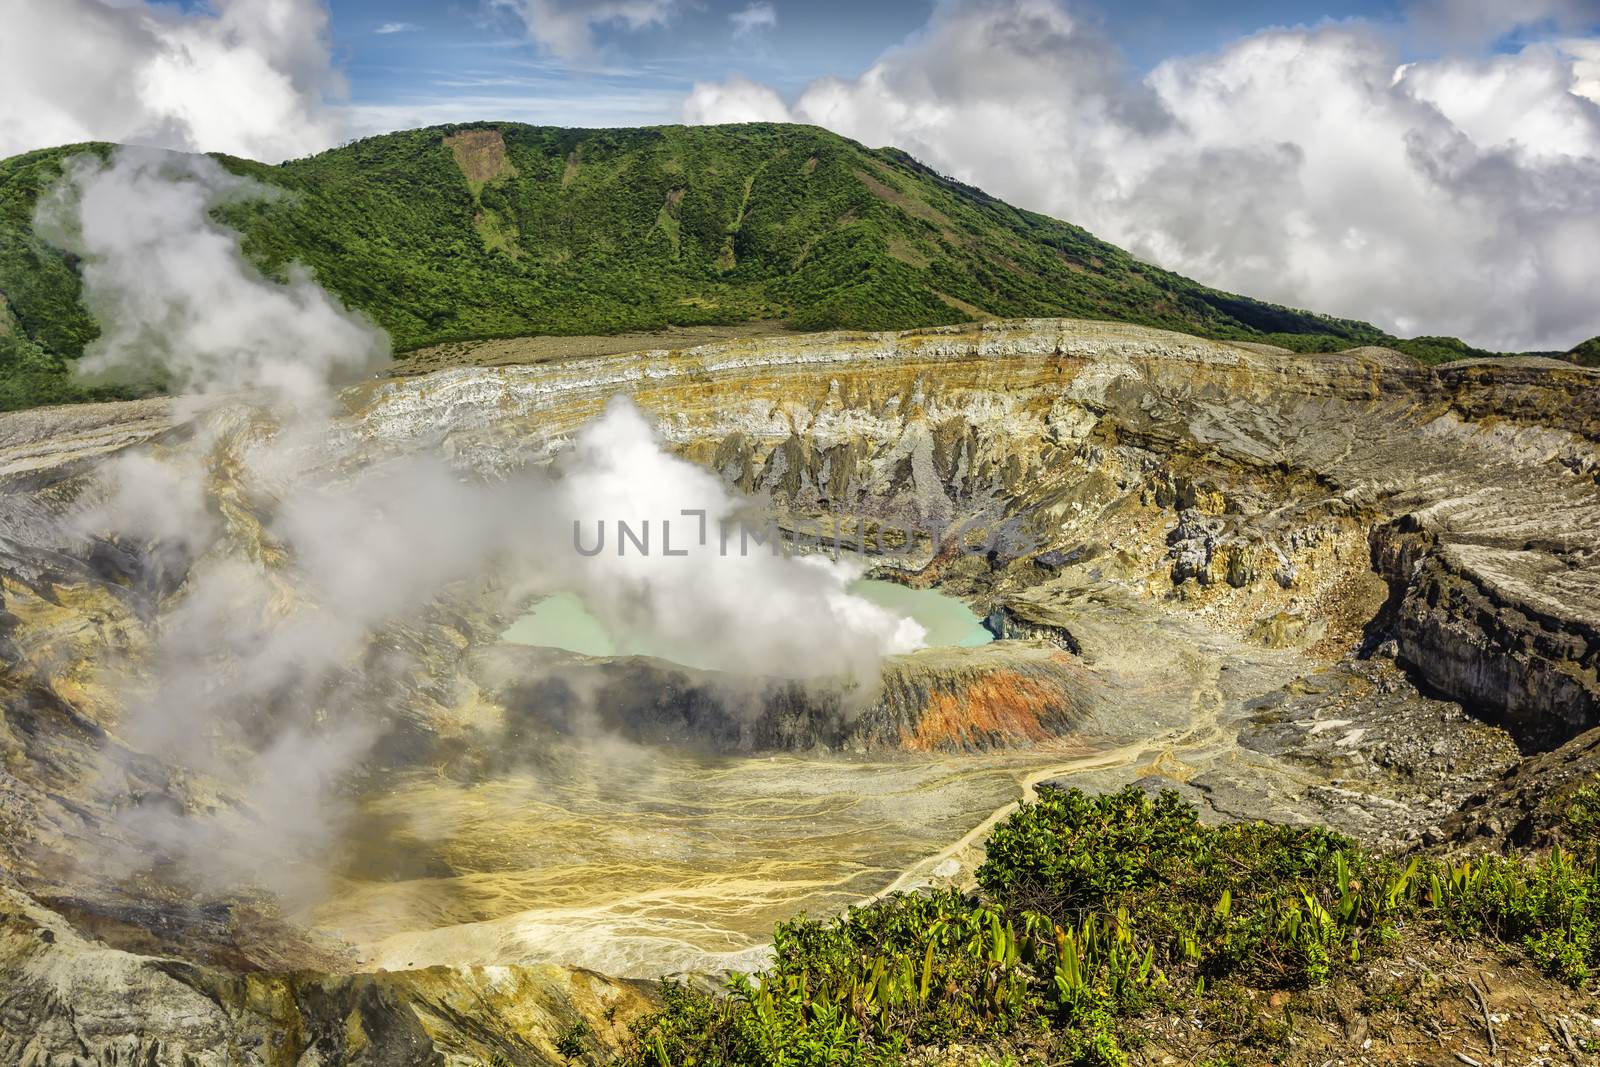 Photo of main crater of Poas Volcano in Costa Rica.